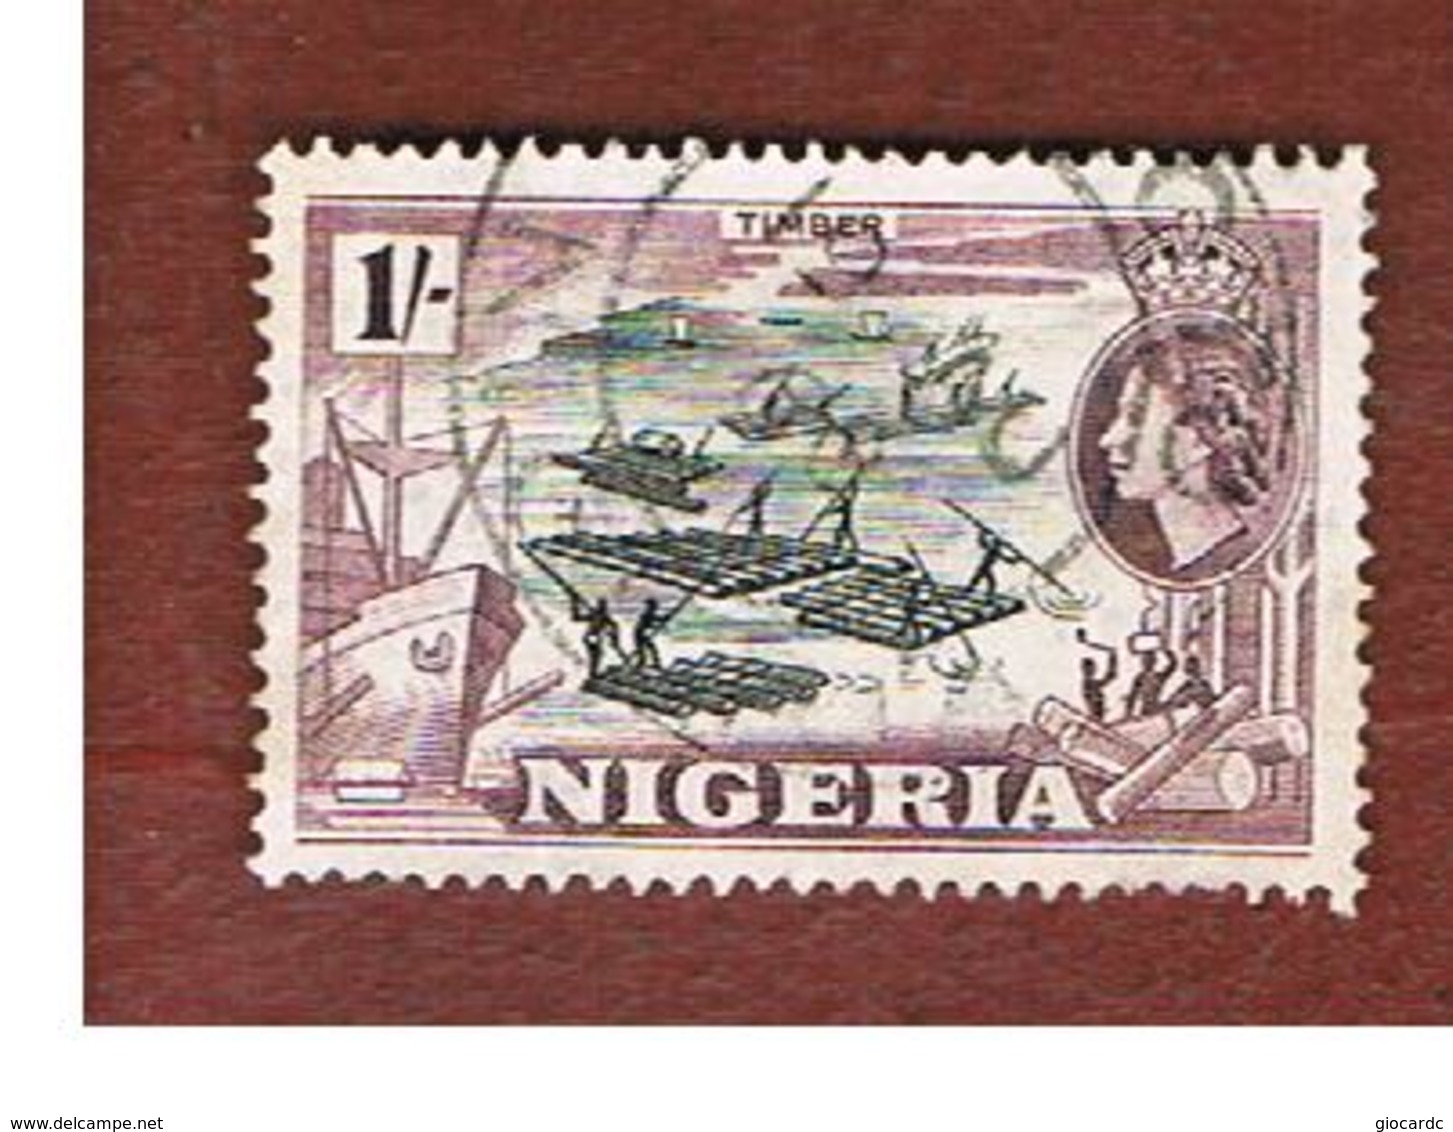 NIGERIA  -  SG 76  -  1953 TIMBER   -  USED * - Nigeria (...-1960)